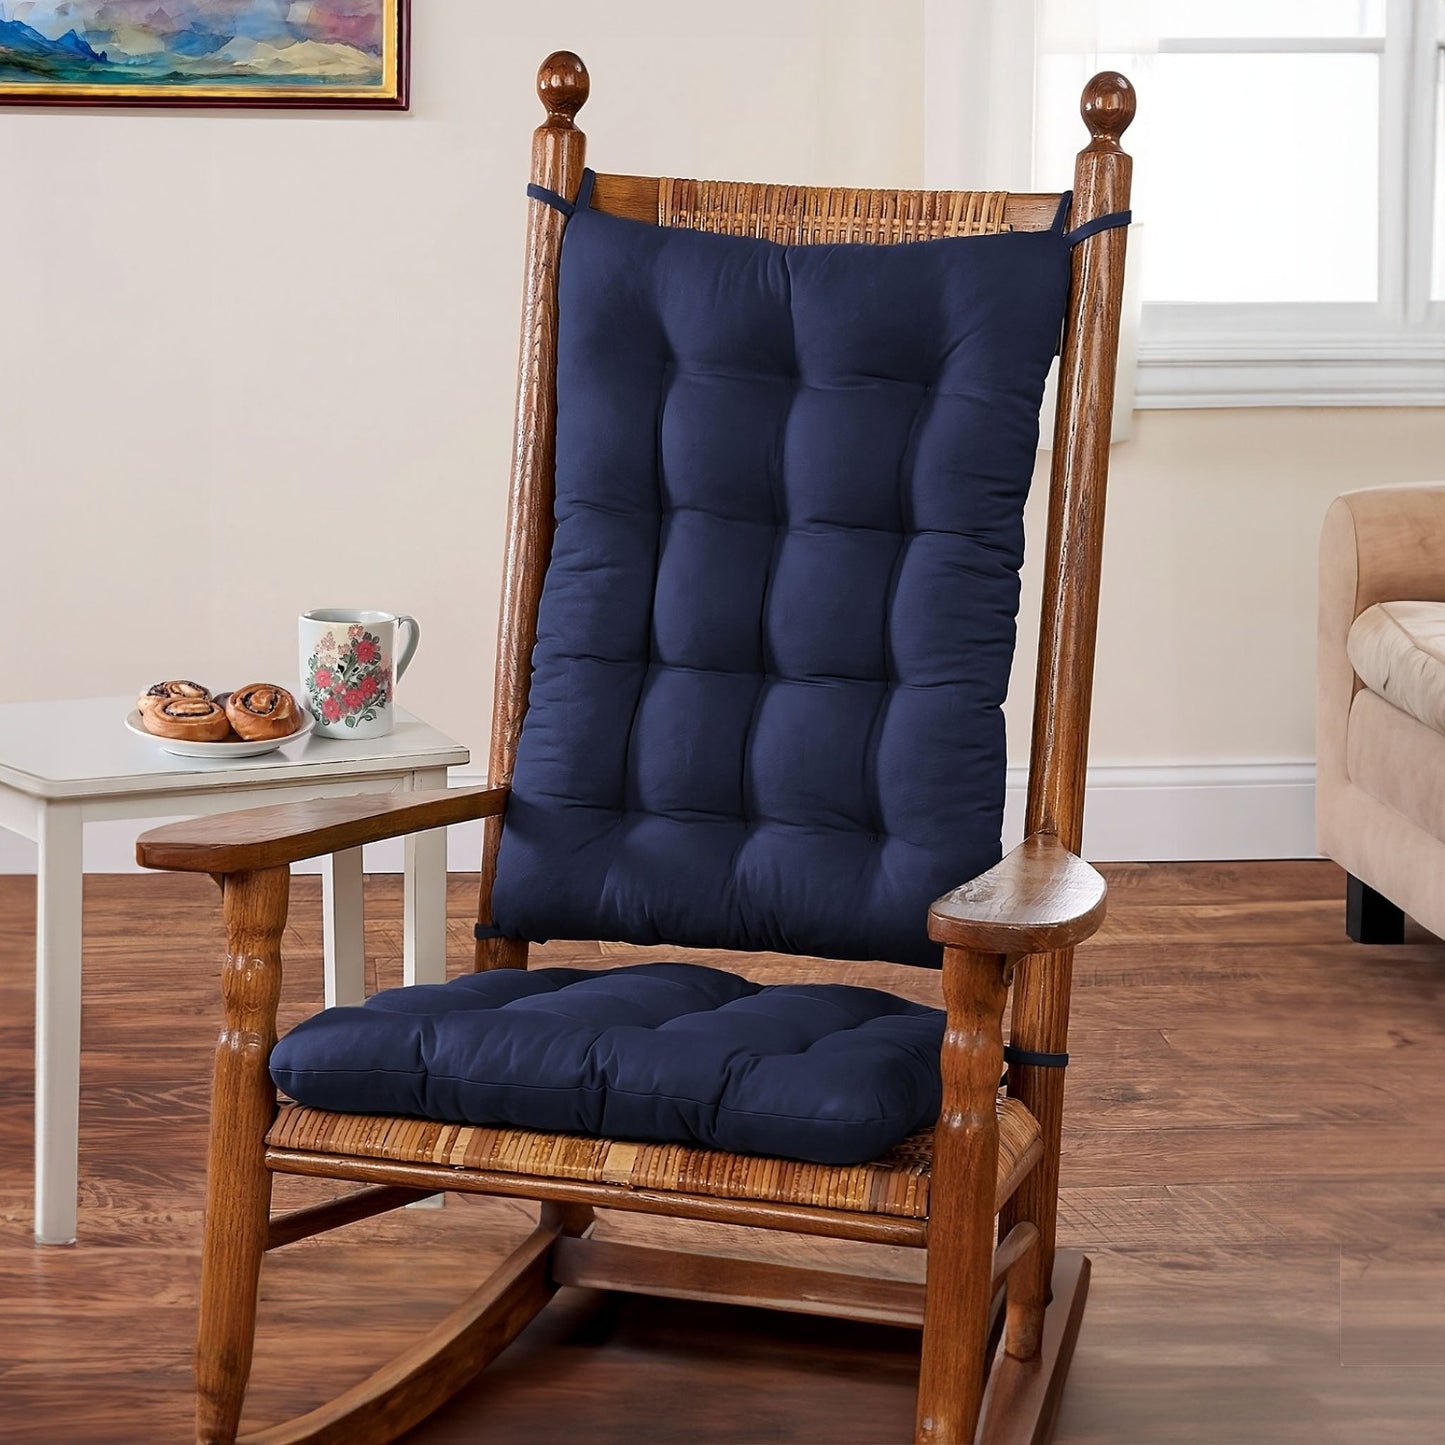 Duck Shape Office Chair Cushion – The Refined Emporium